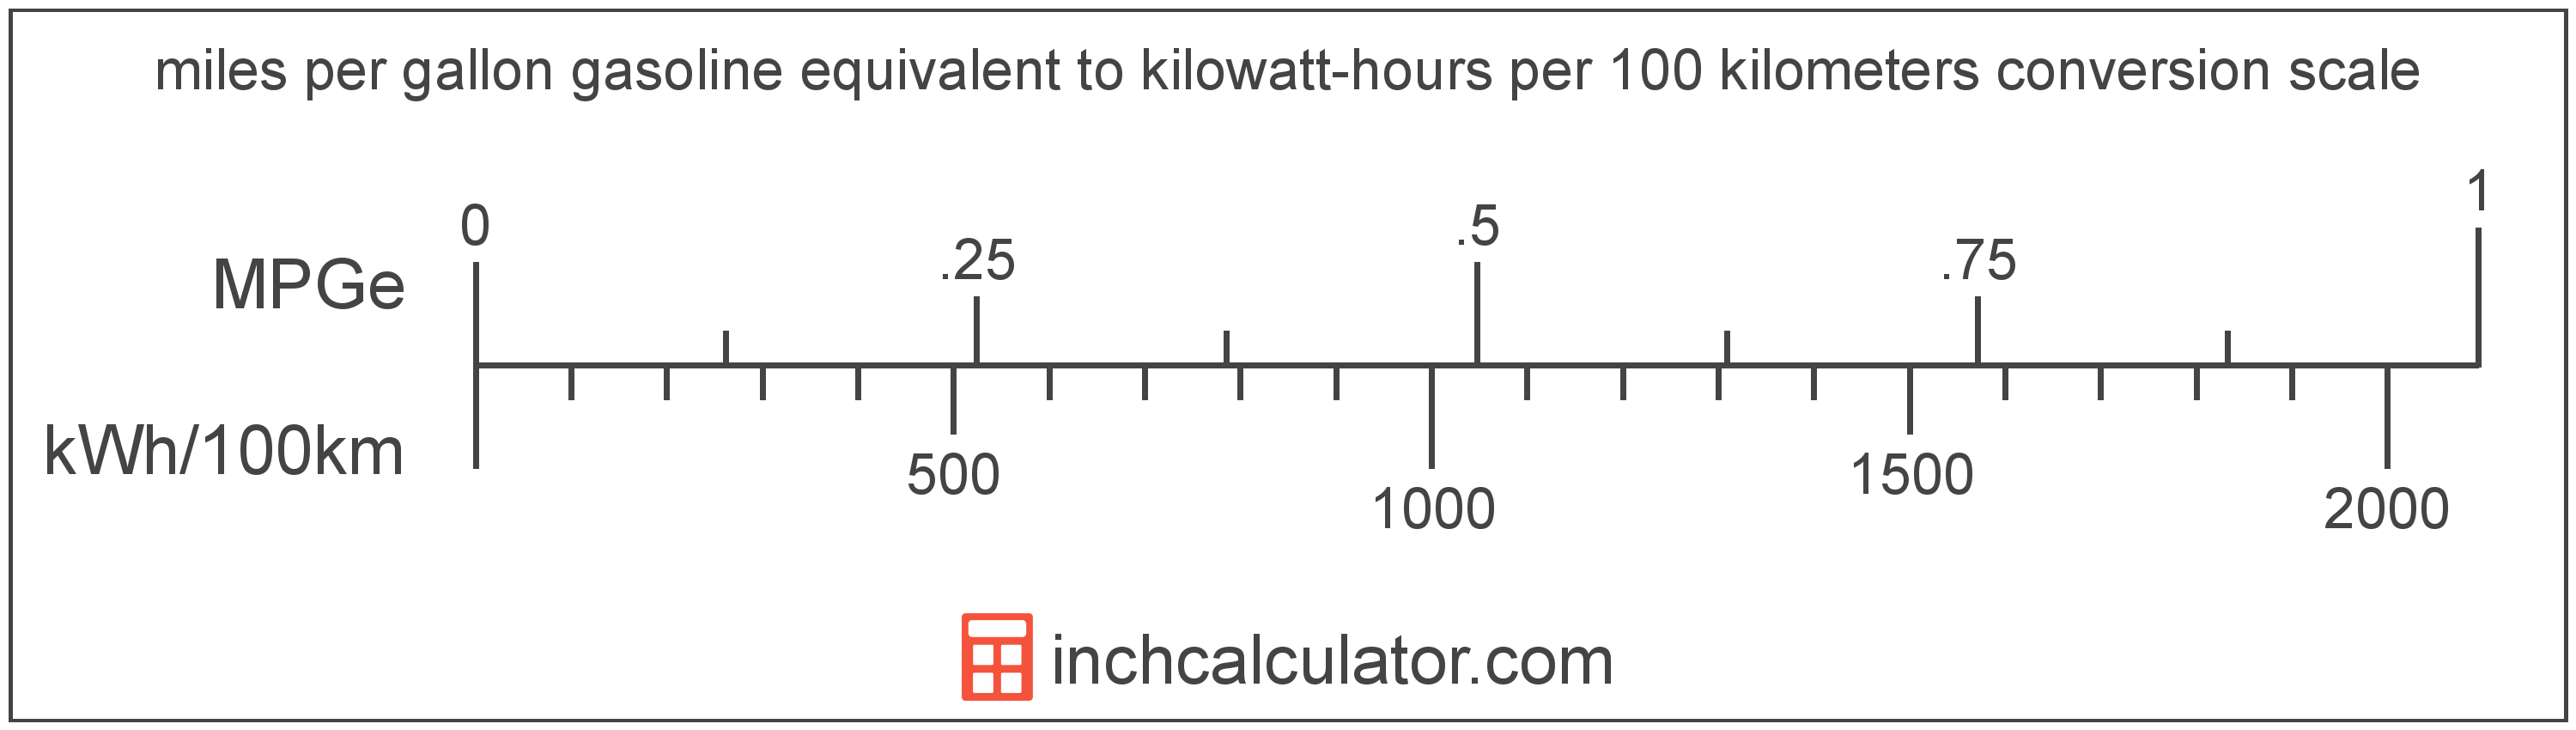 conversion scale showing kilowatt-hours per 100 kilometers and equivalent miles per gallon gasoline equivalent electric car efficiency values